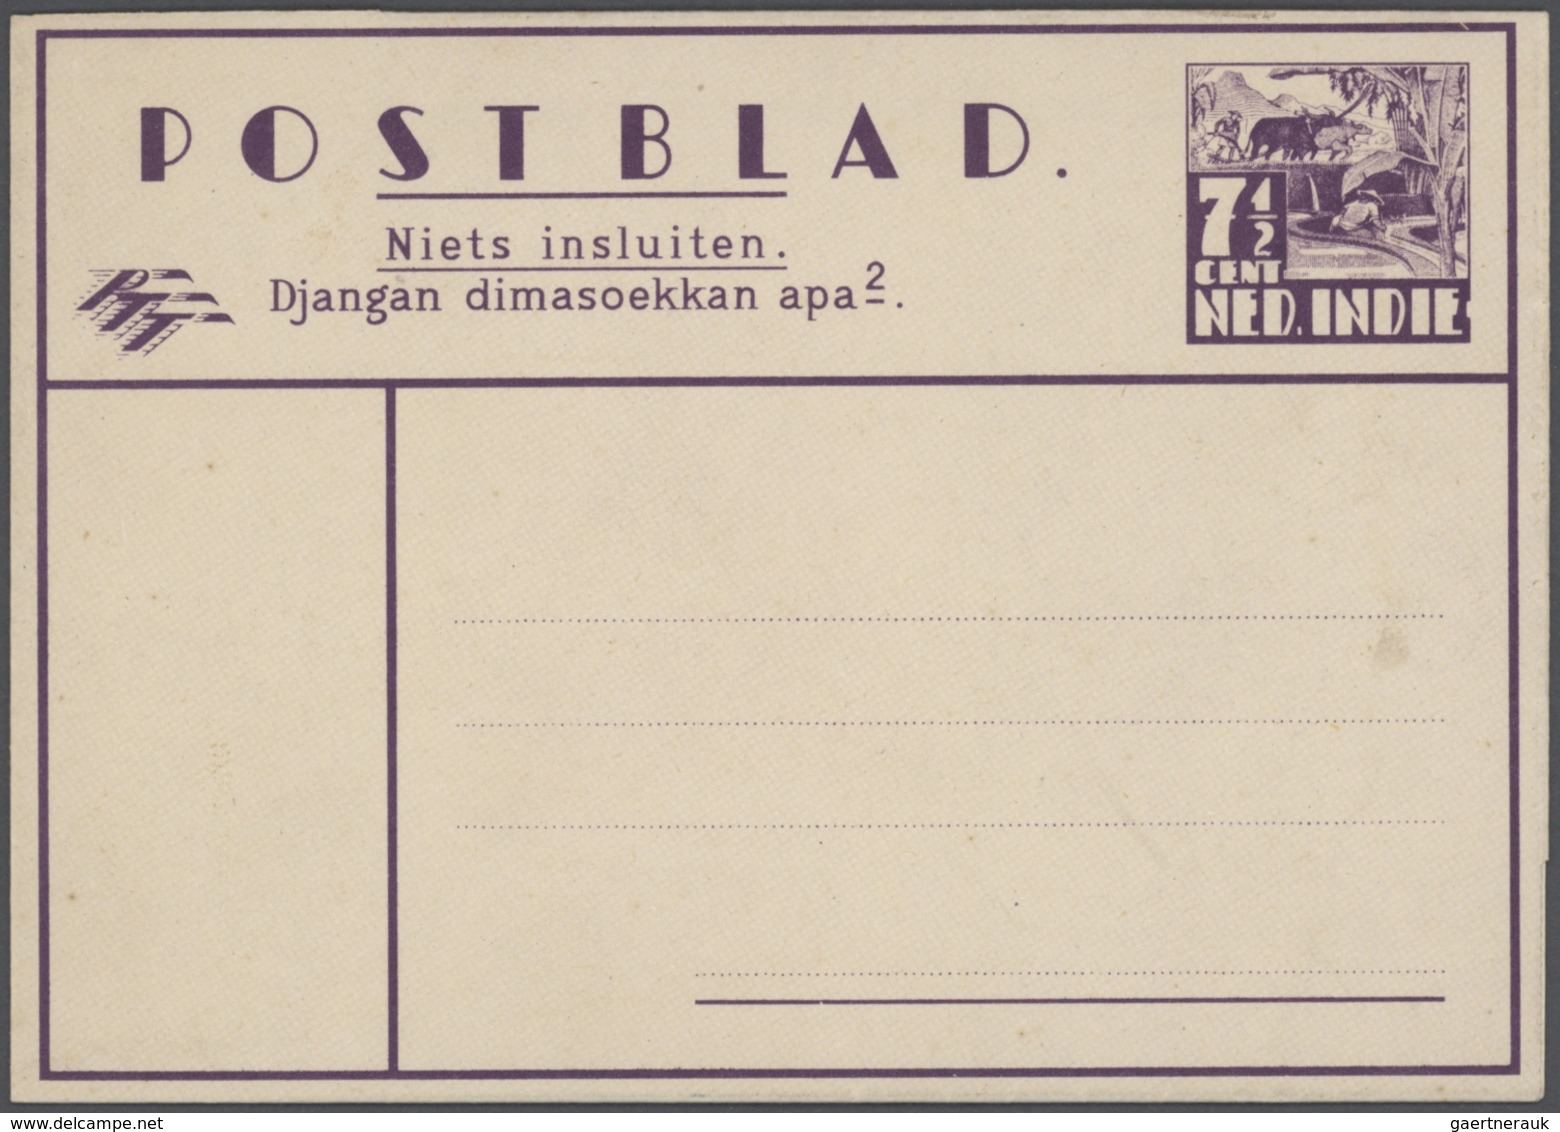 Niederlande - Ganzsachen: 1933/1990 (ca.), accumulation of several hundred unused stationeries with